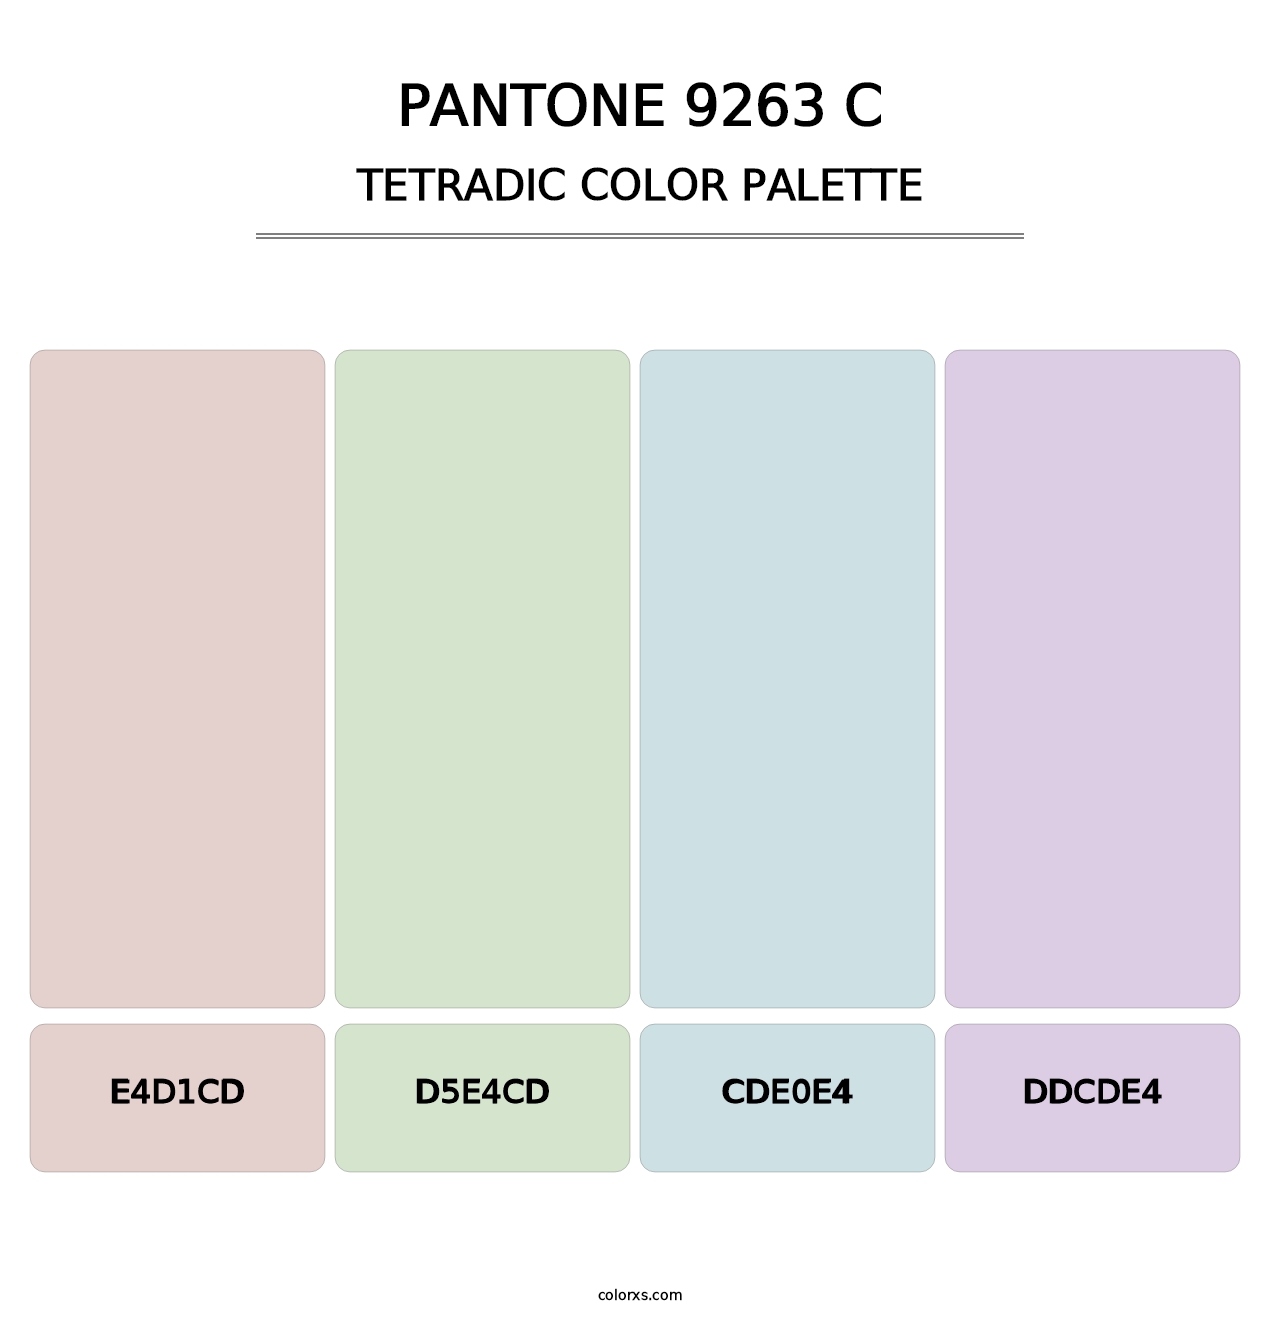 PANTONE 9263 C - Tetradic Color Palette